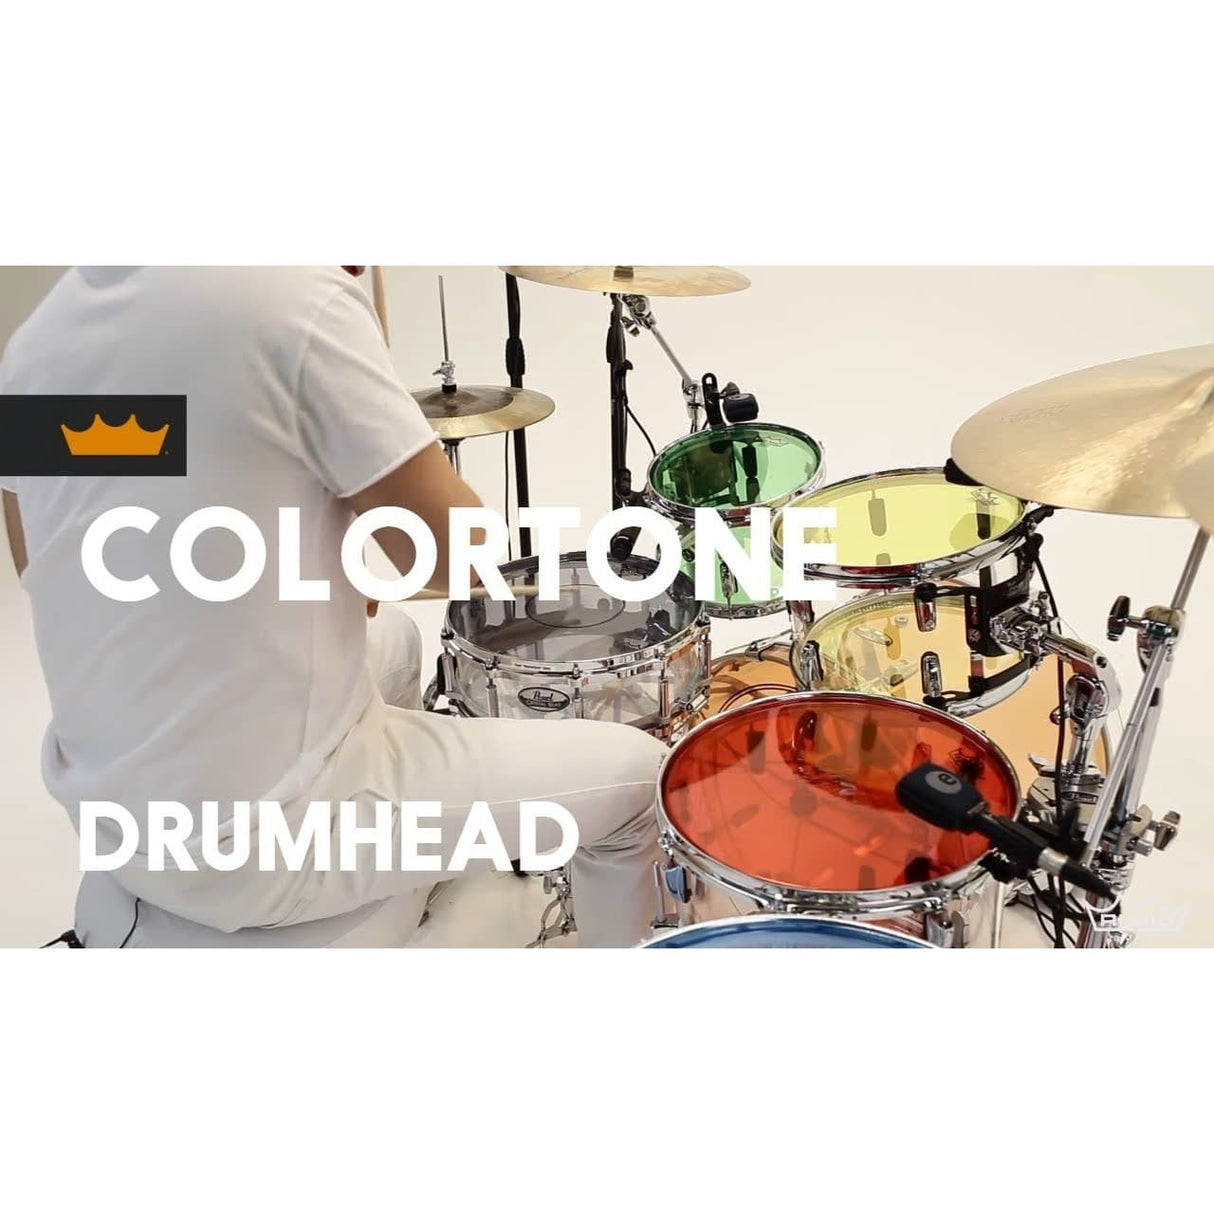 Remo Powerstroke 77 Colortone Orange 14 Inch Drum Head